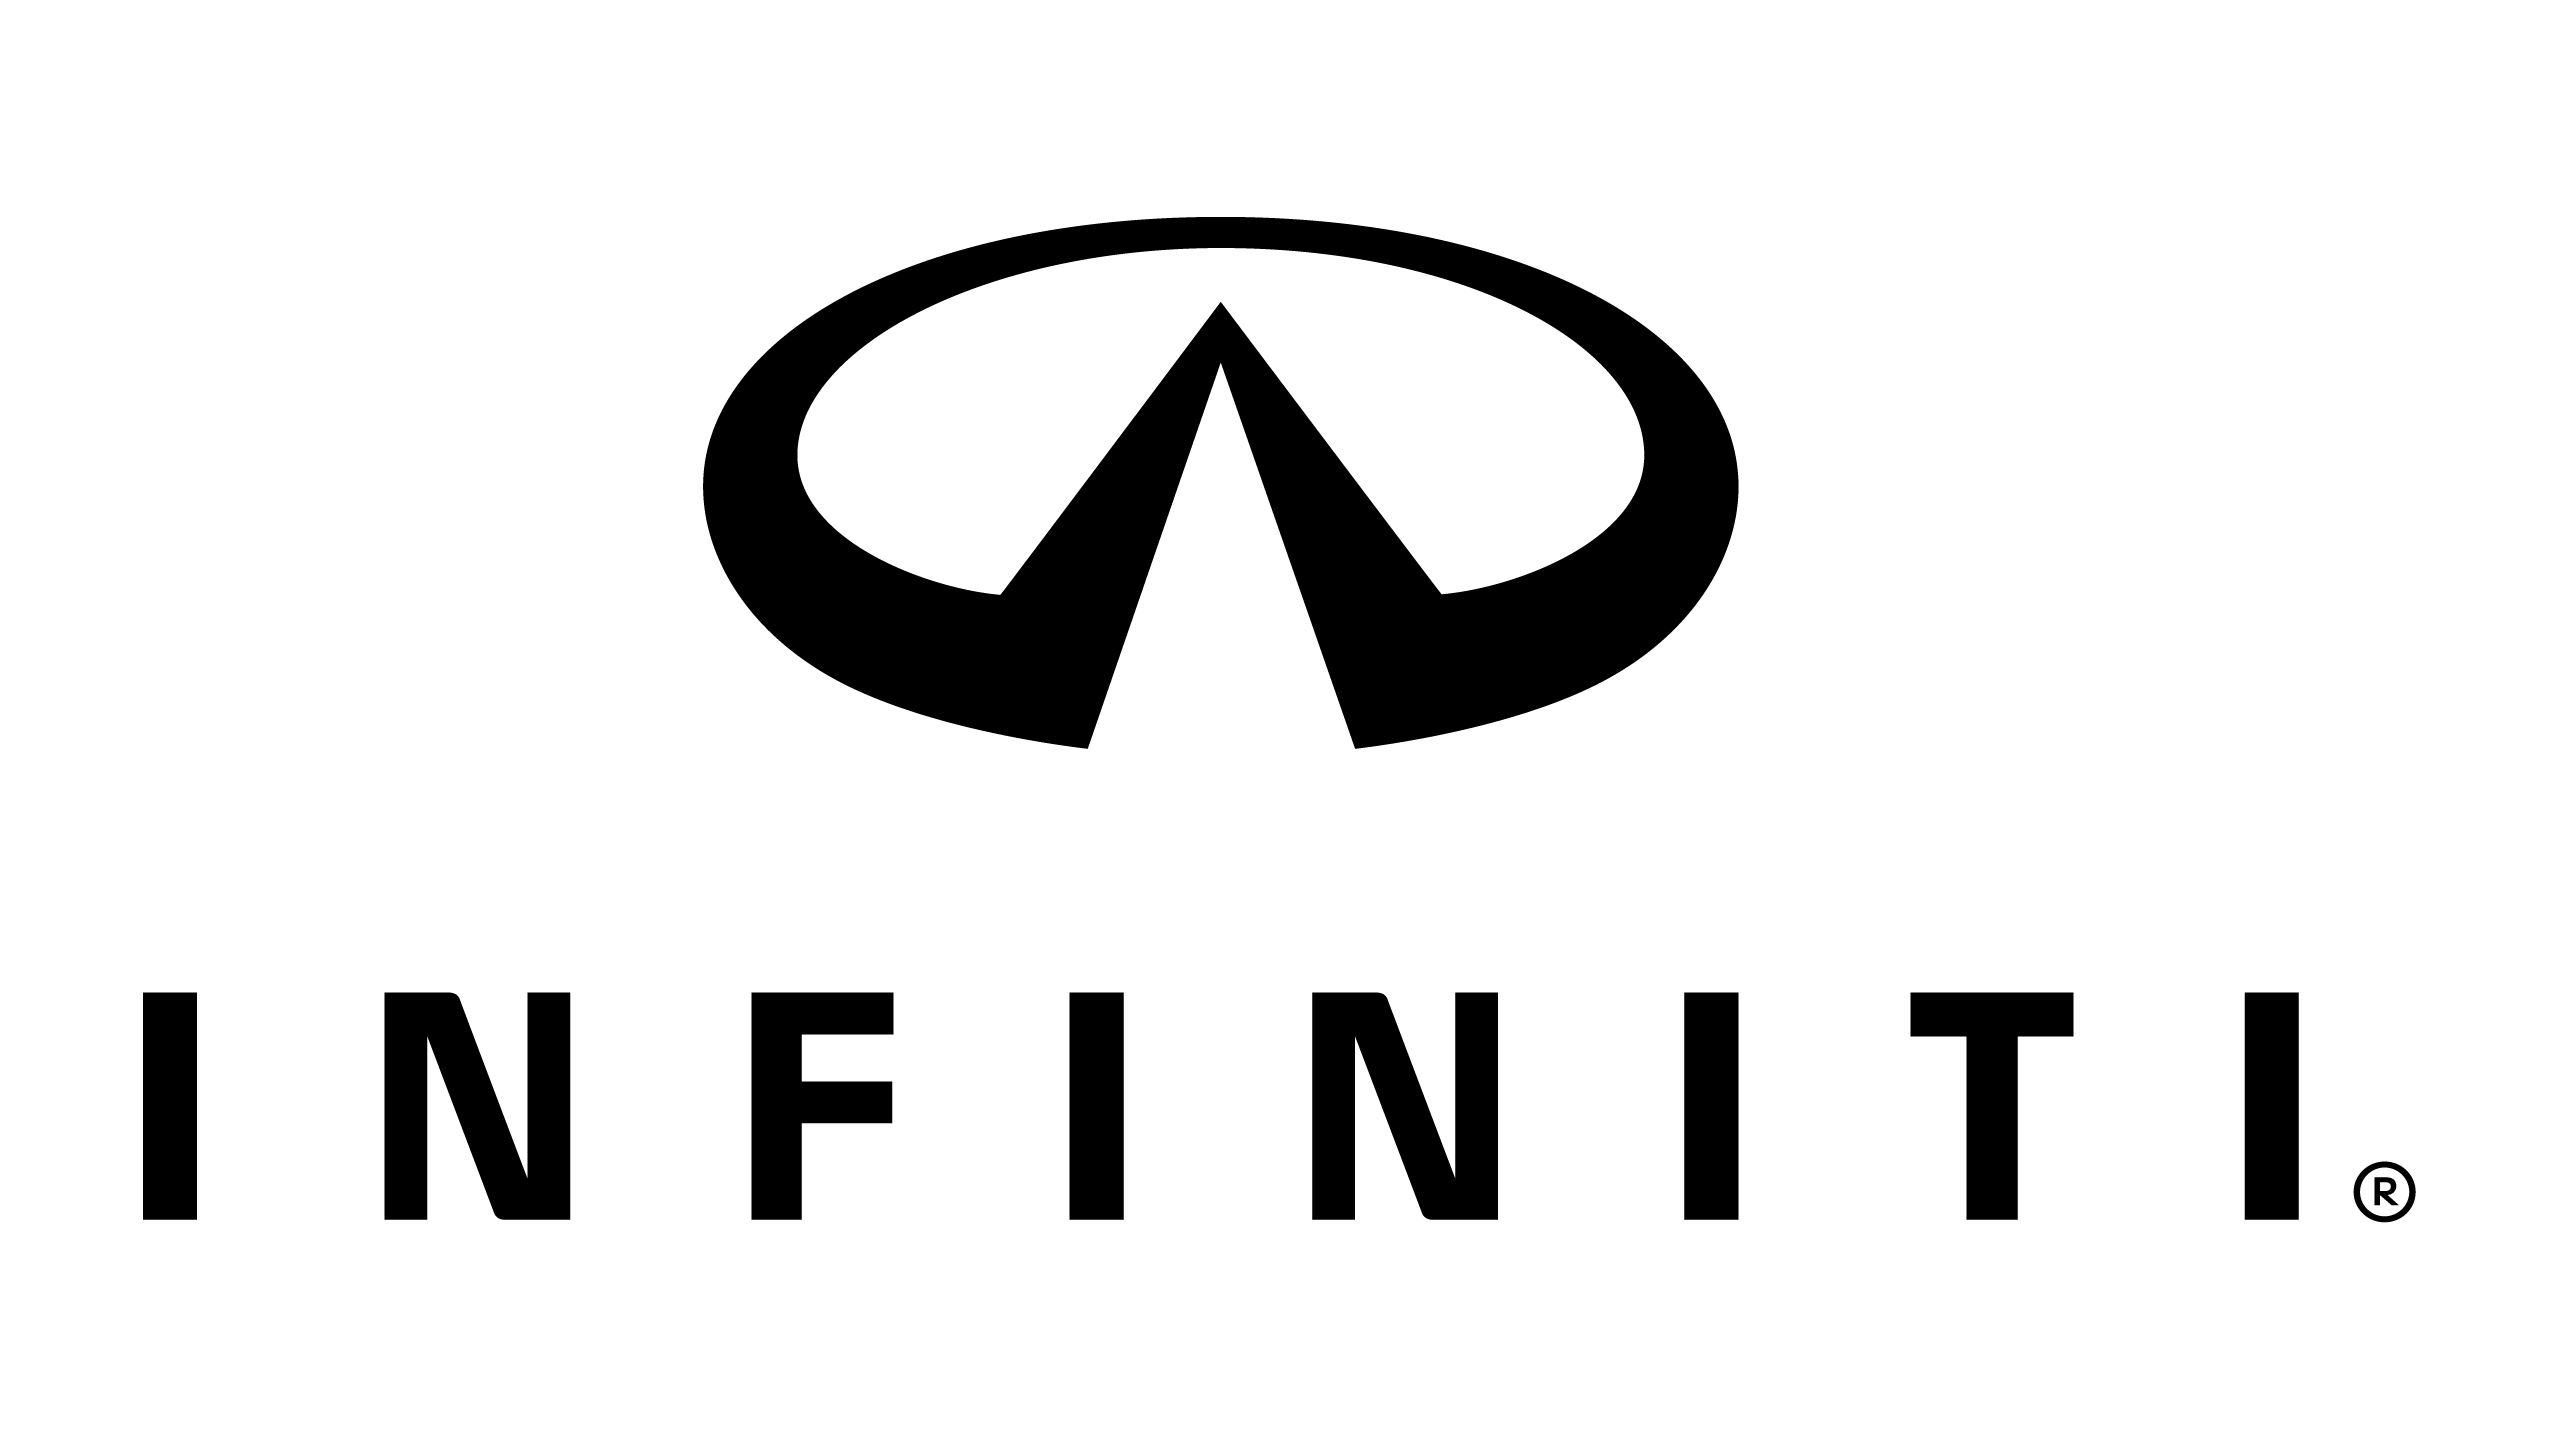 Infiniti logo PNG